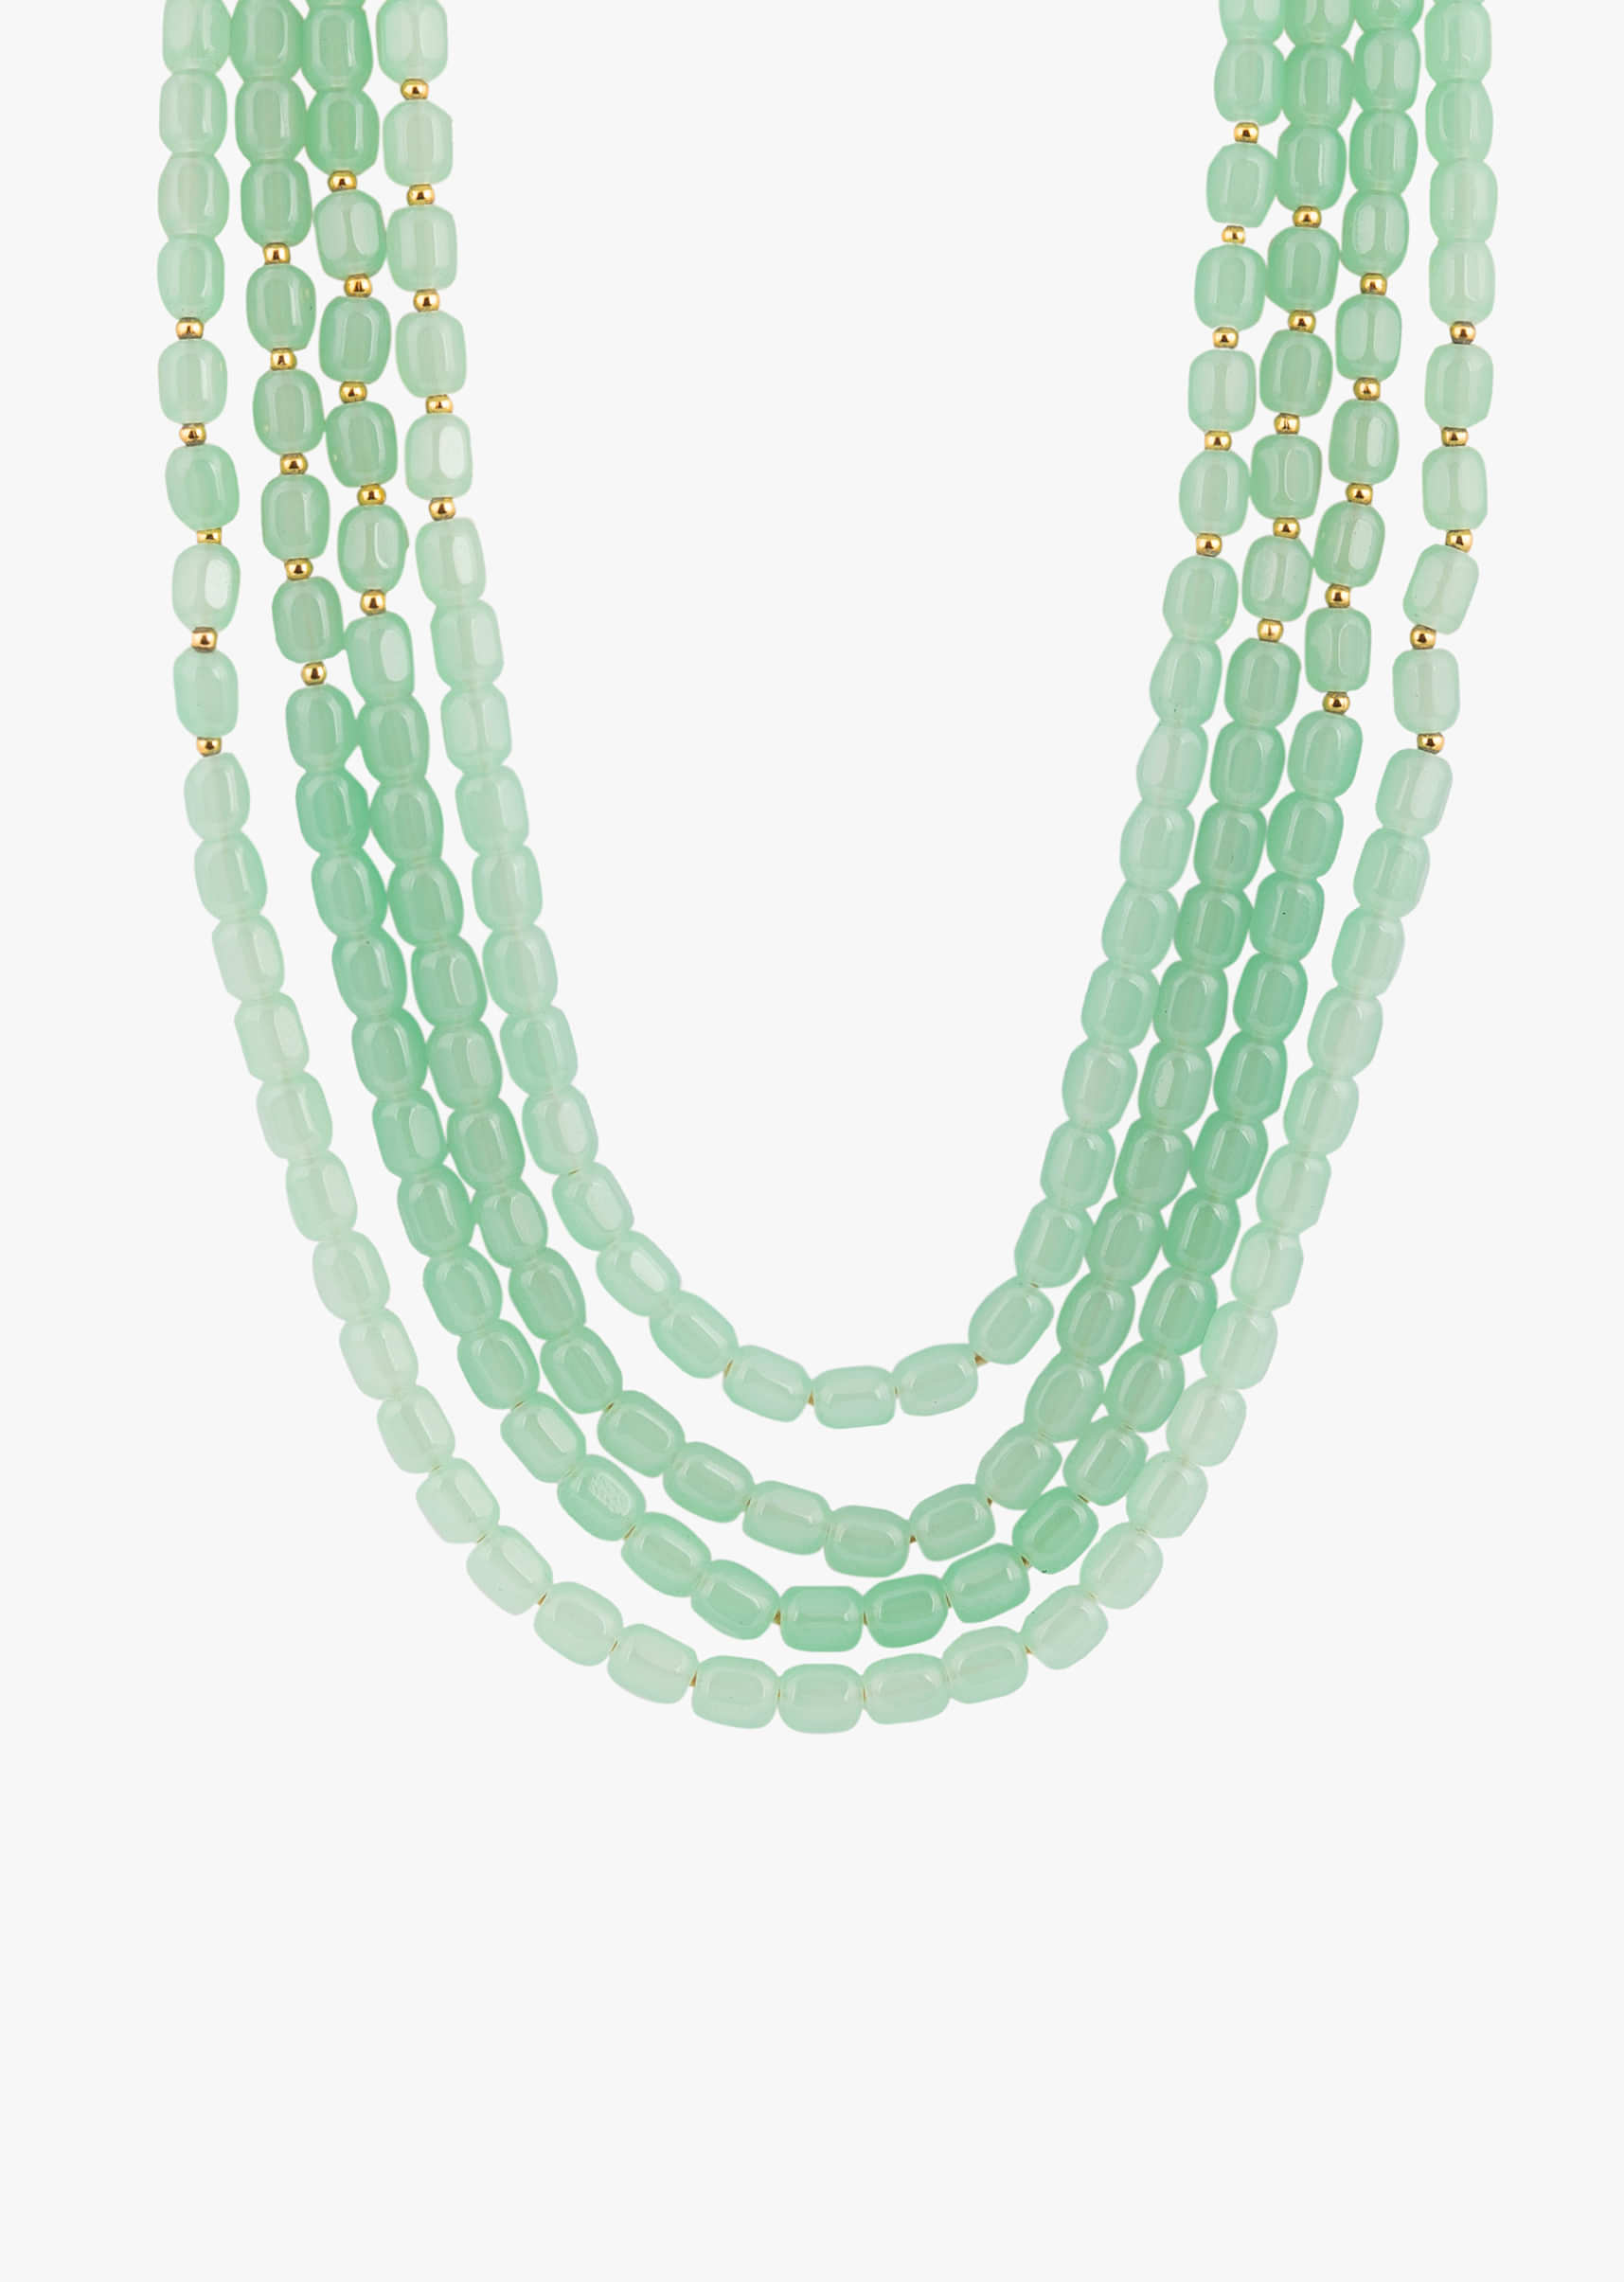 Four Layered Green Beads Mala